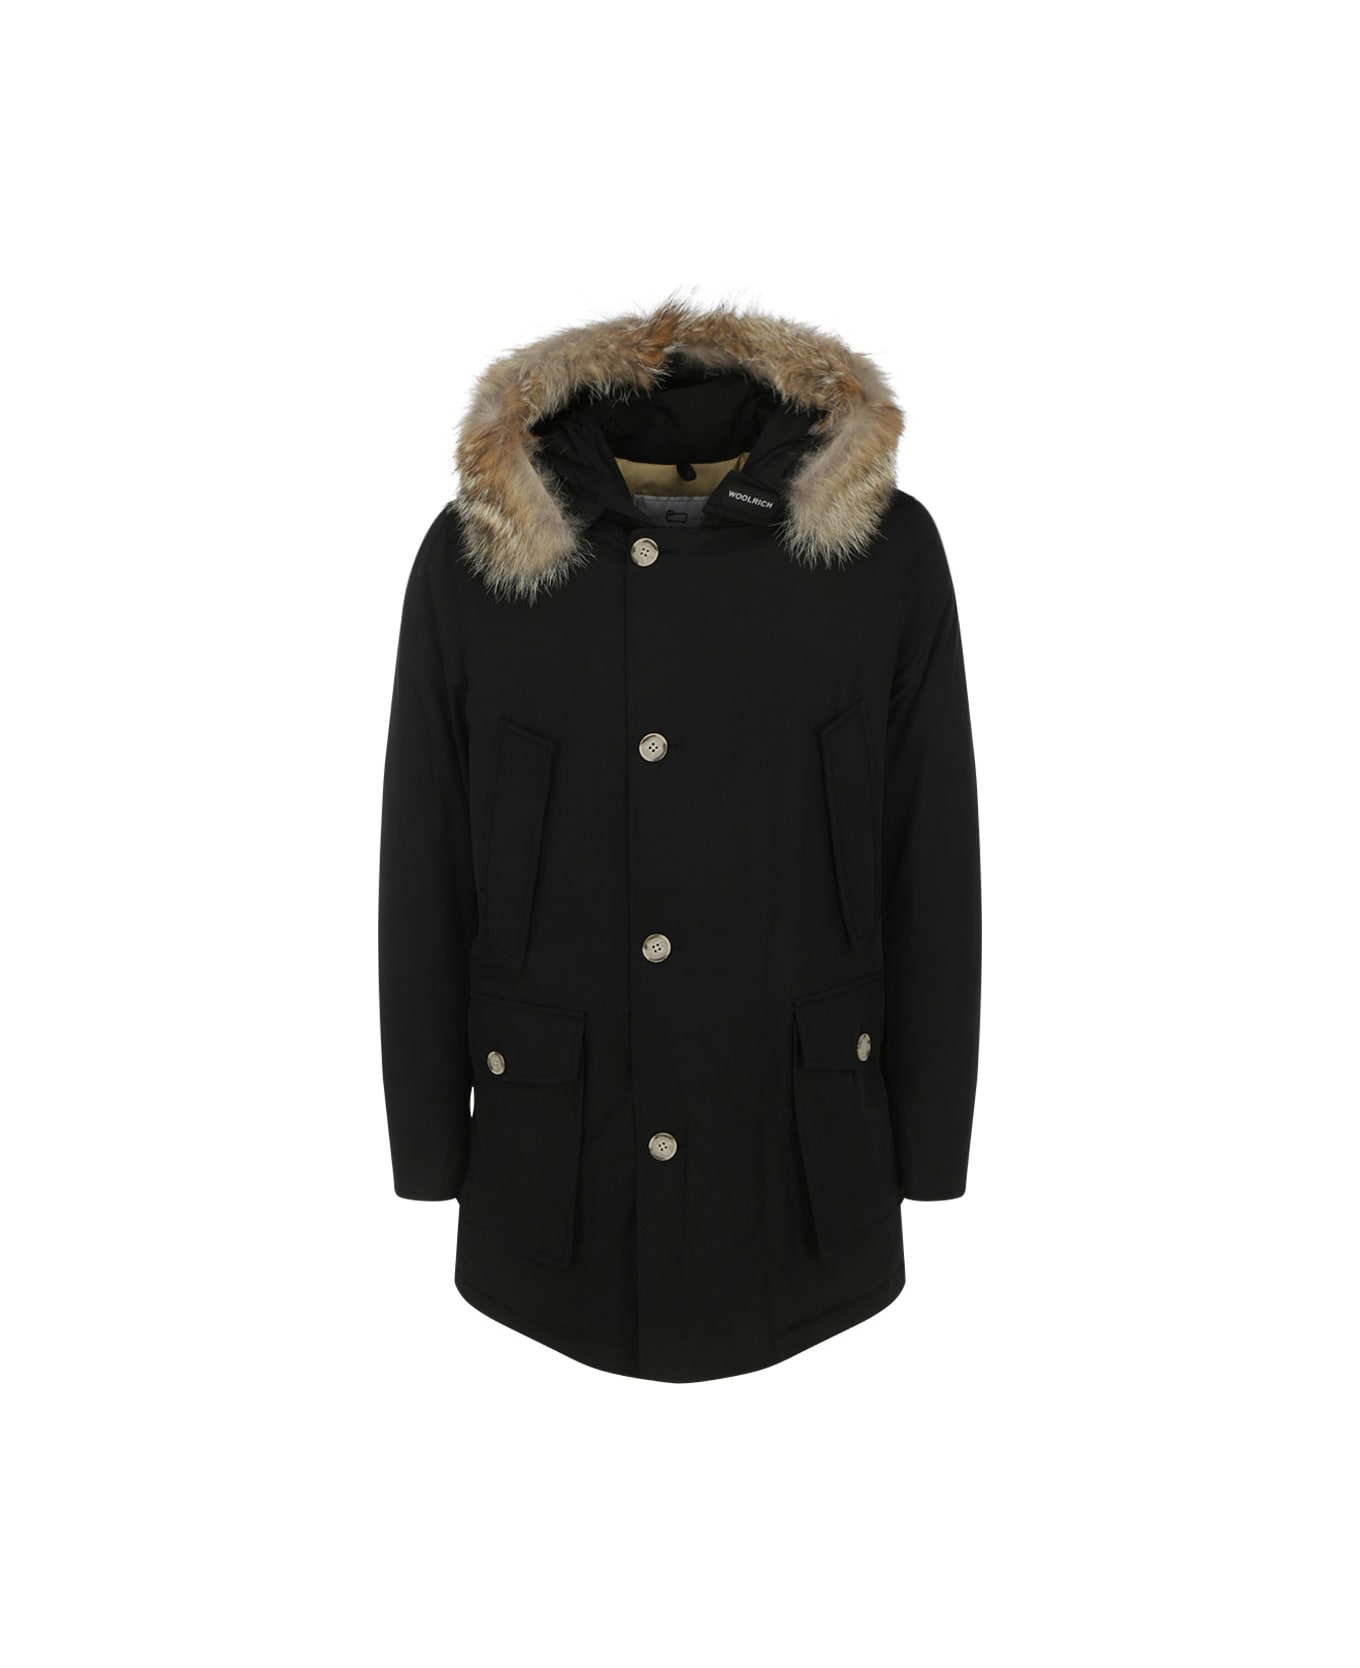 Woolrich Parka Arctic Jacket - Blk Black コート